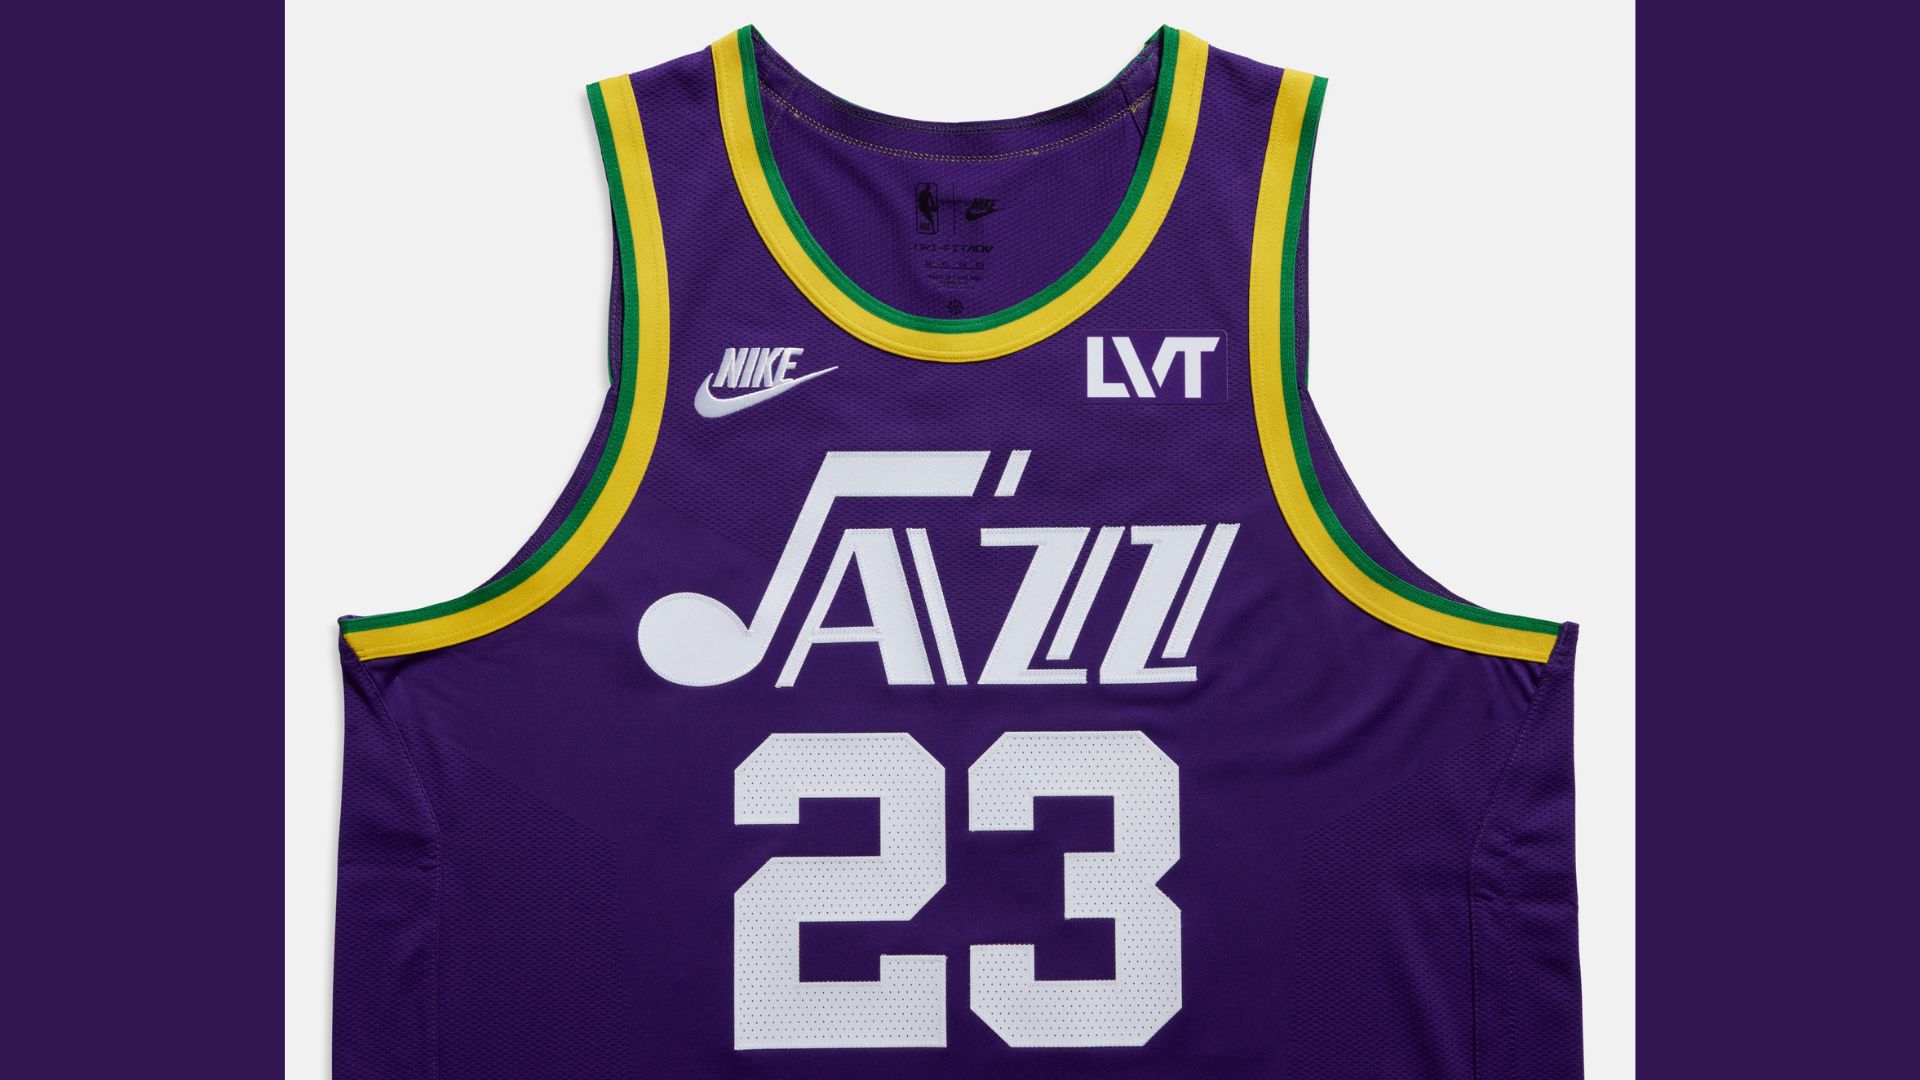 jazz city edition jerseys